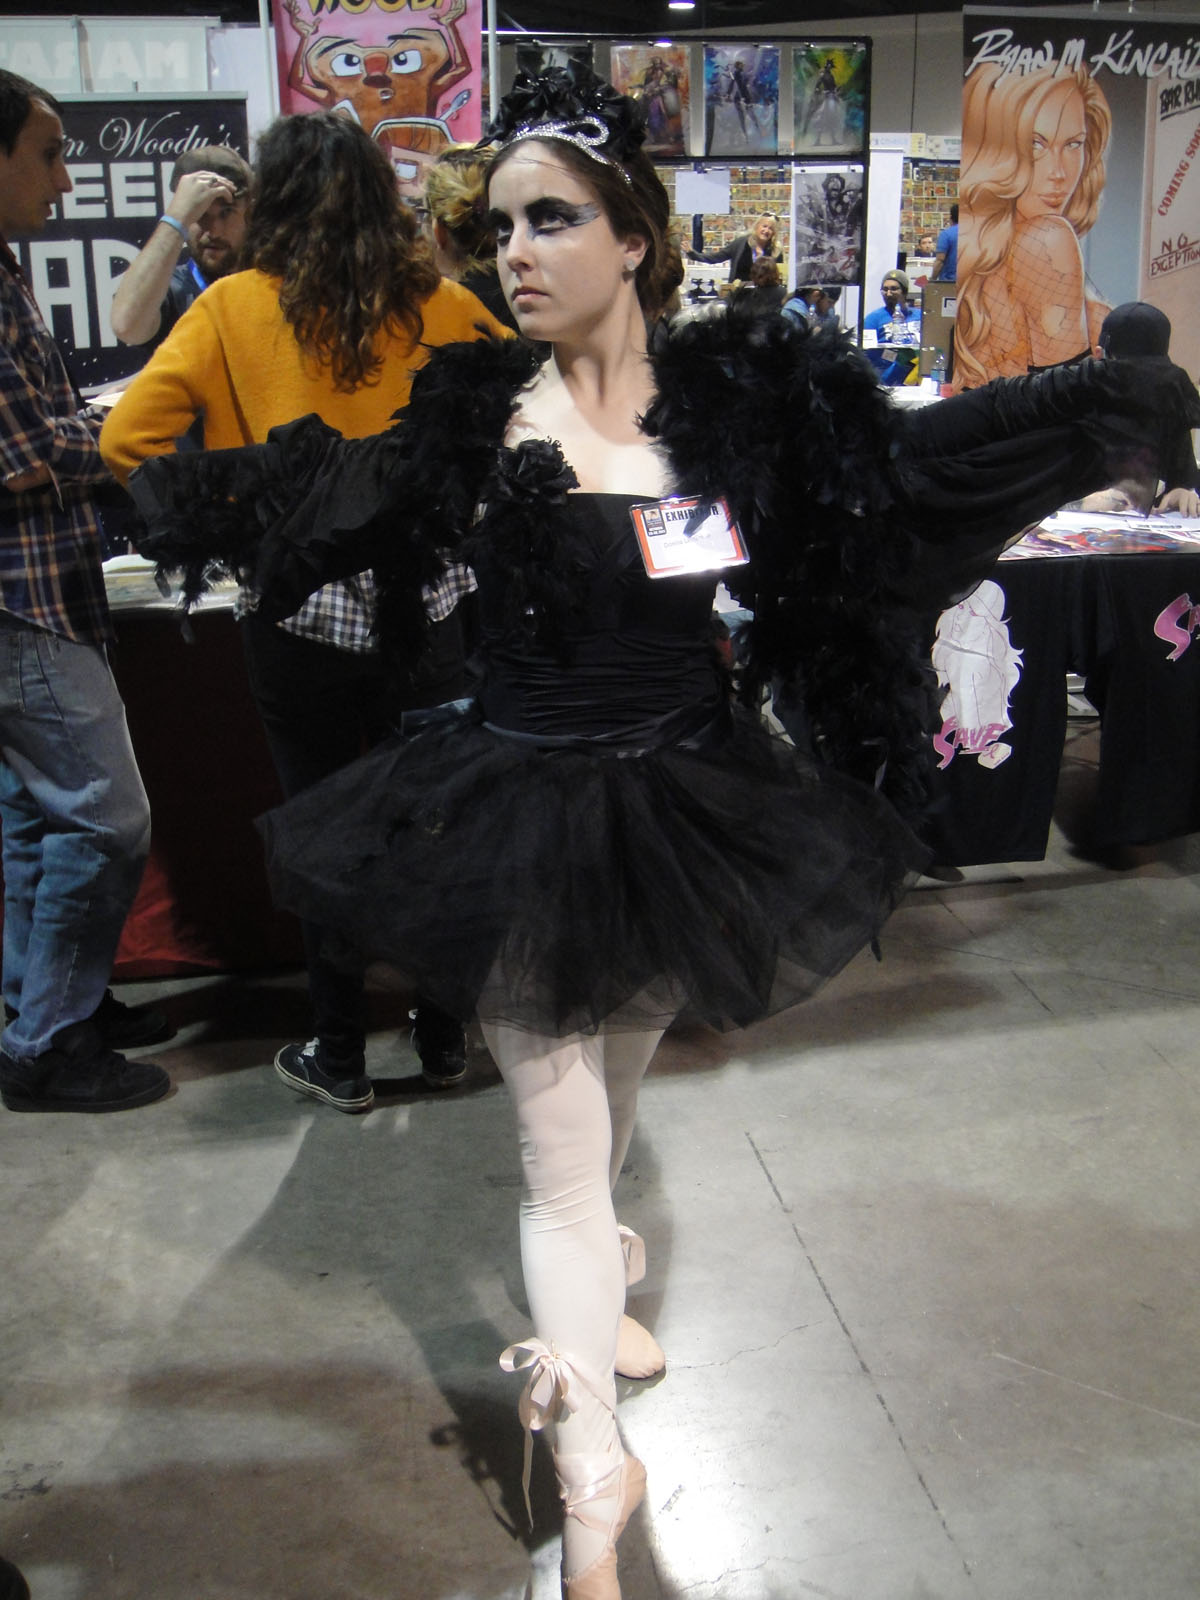 File:Long Beach Comic & Horror Con 2011 - Black Swan (6301704186).jpg -  Wikimedia Commons